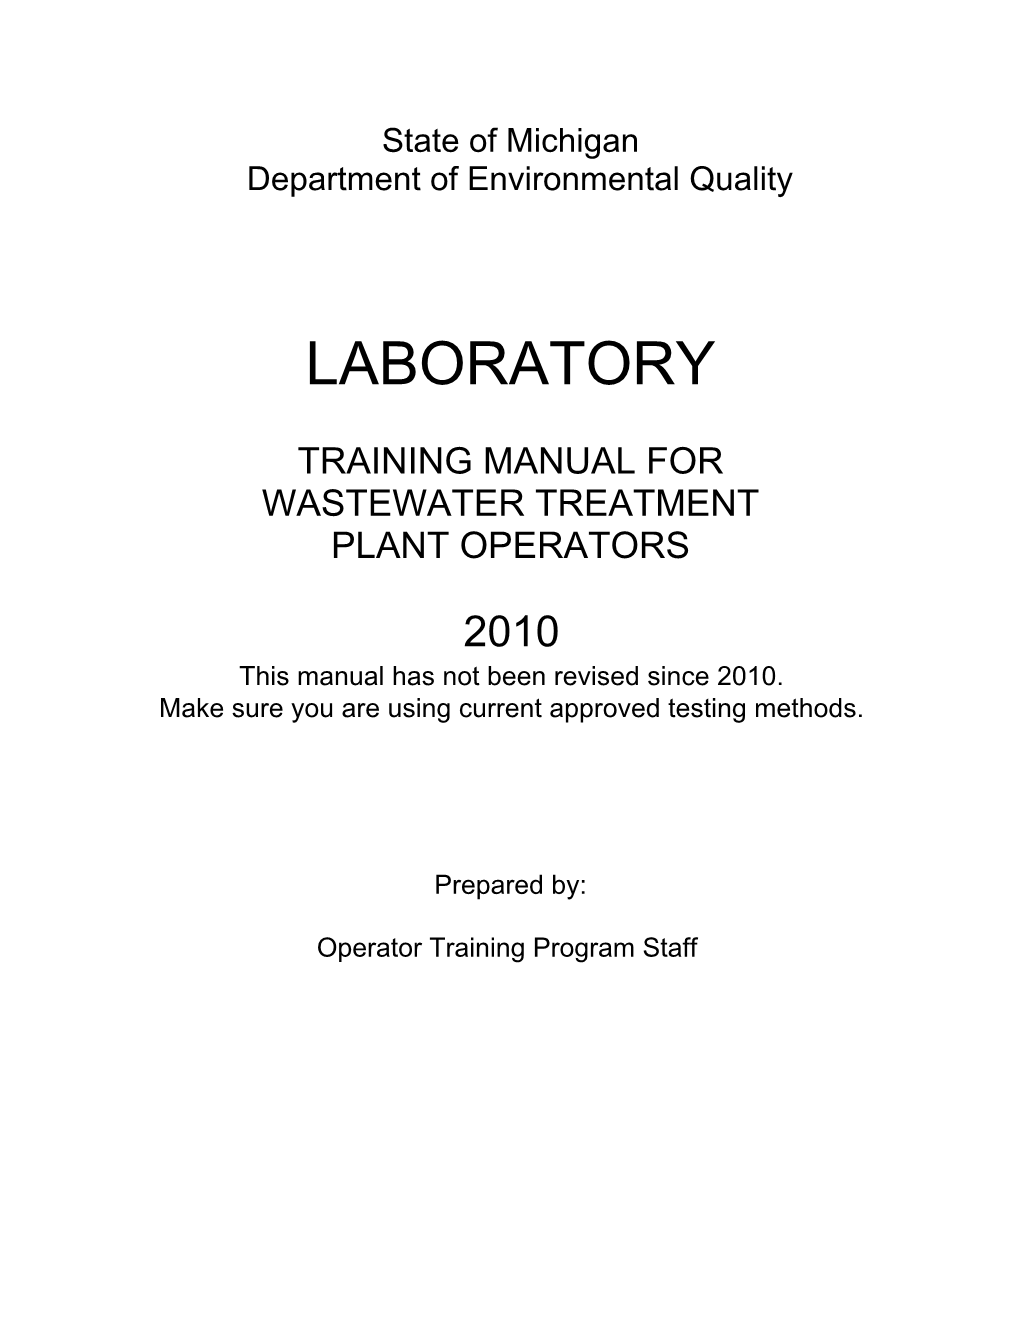 Wastewater Laboratory Training Manual for Treatment Plant Operators